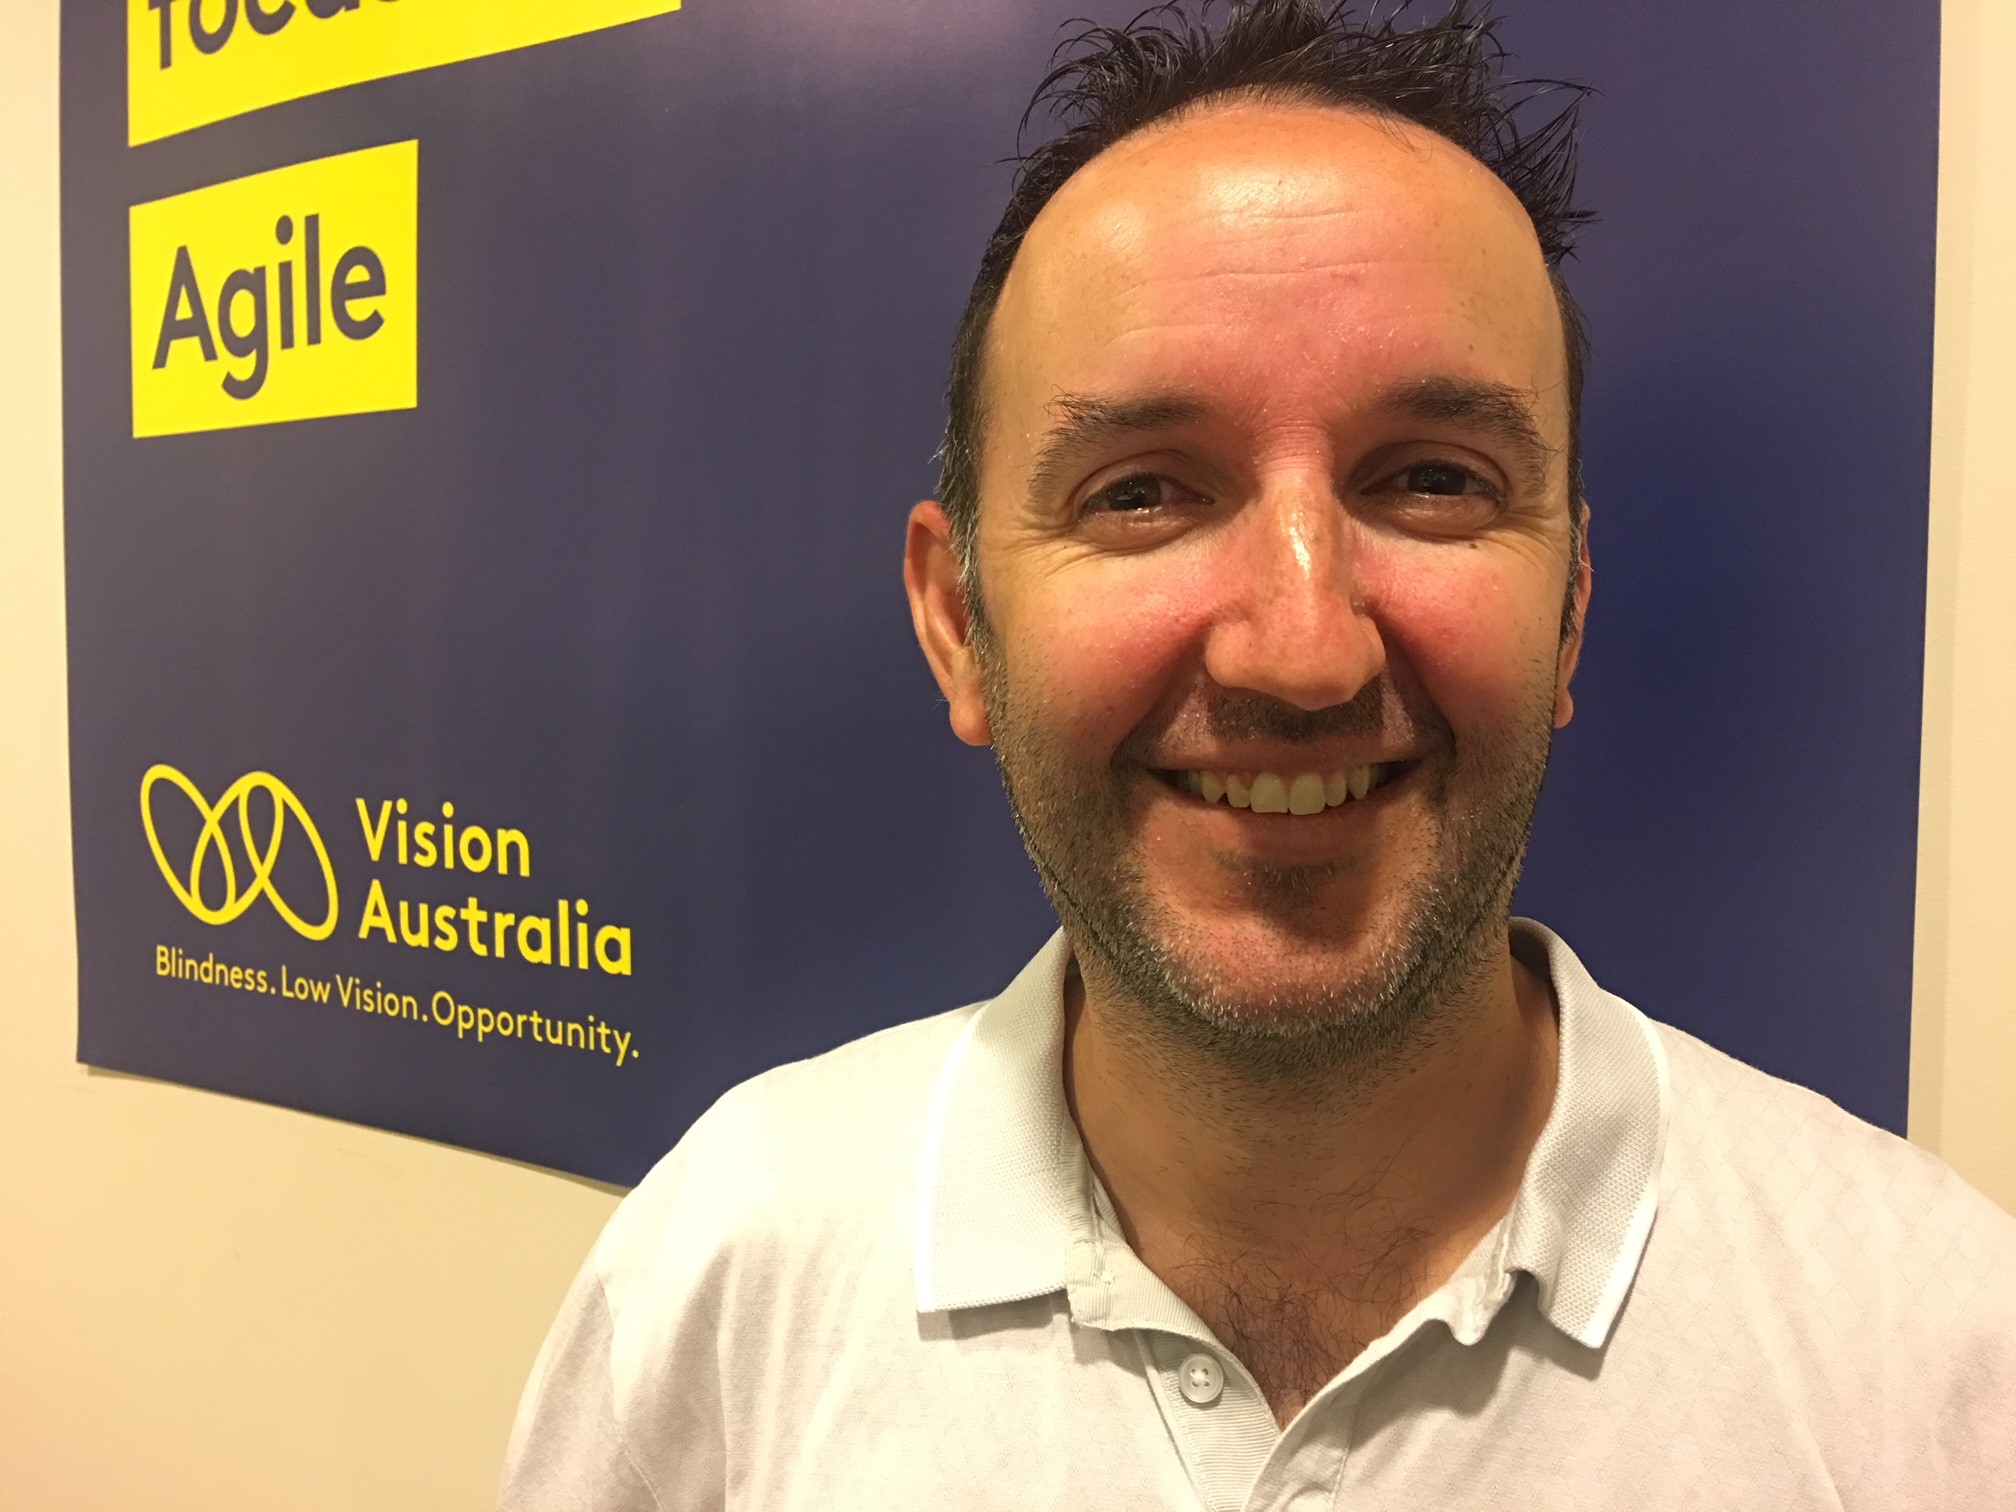 Luke Price at Vision Australia office